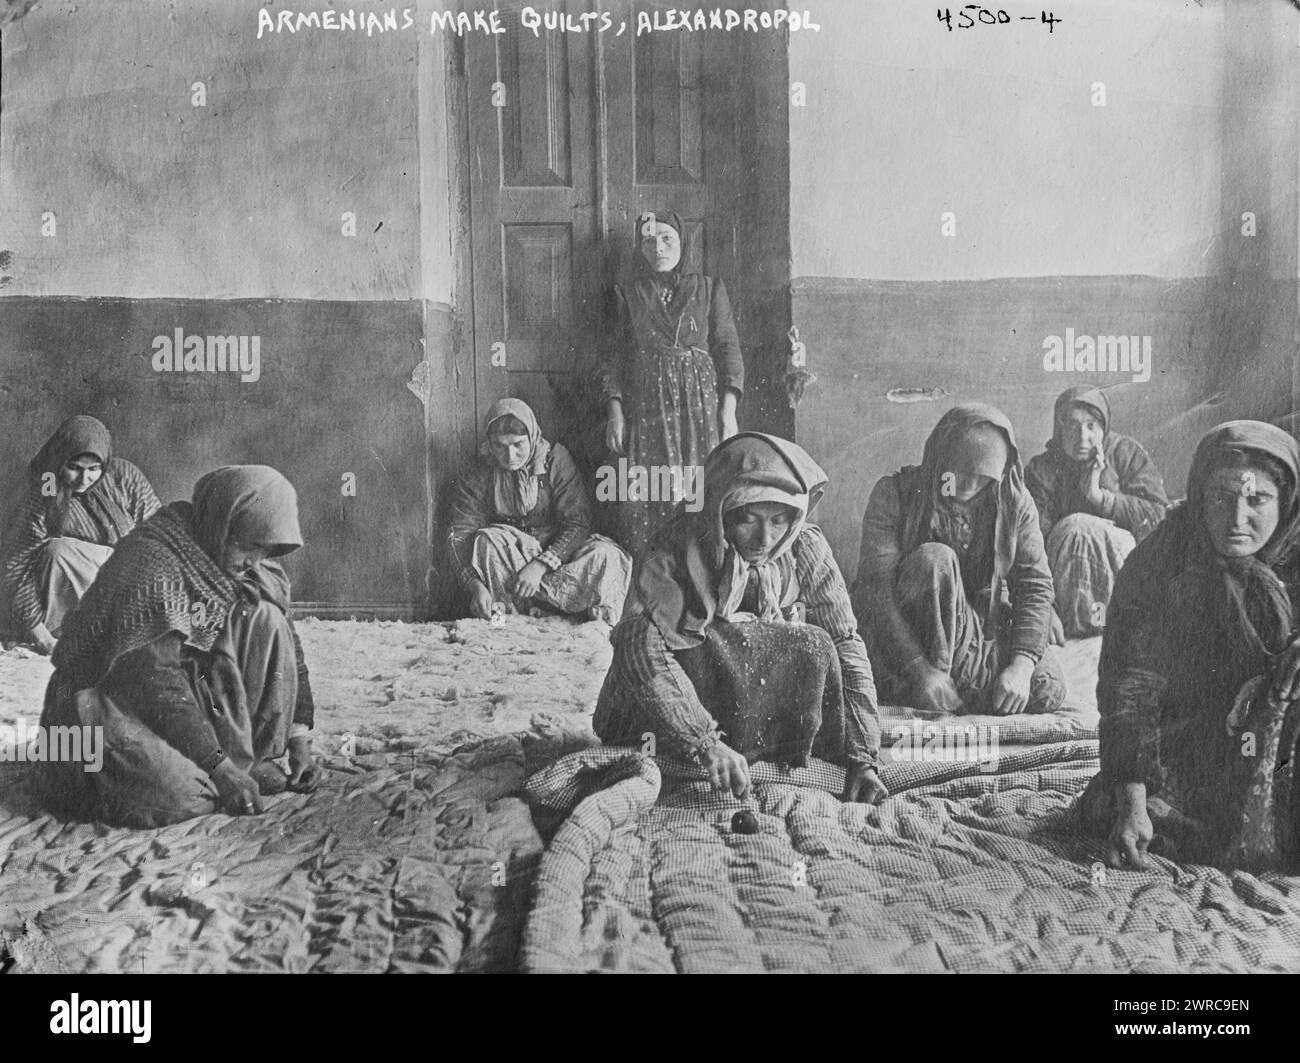 Armenians make quilts, Alexandropol, Photo shows Armenian women making quilts in Alexandropol (now Gyumri), Armenia., 1918 March 7, Glass negatives, 1 negative: glass Stock Photo